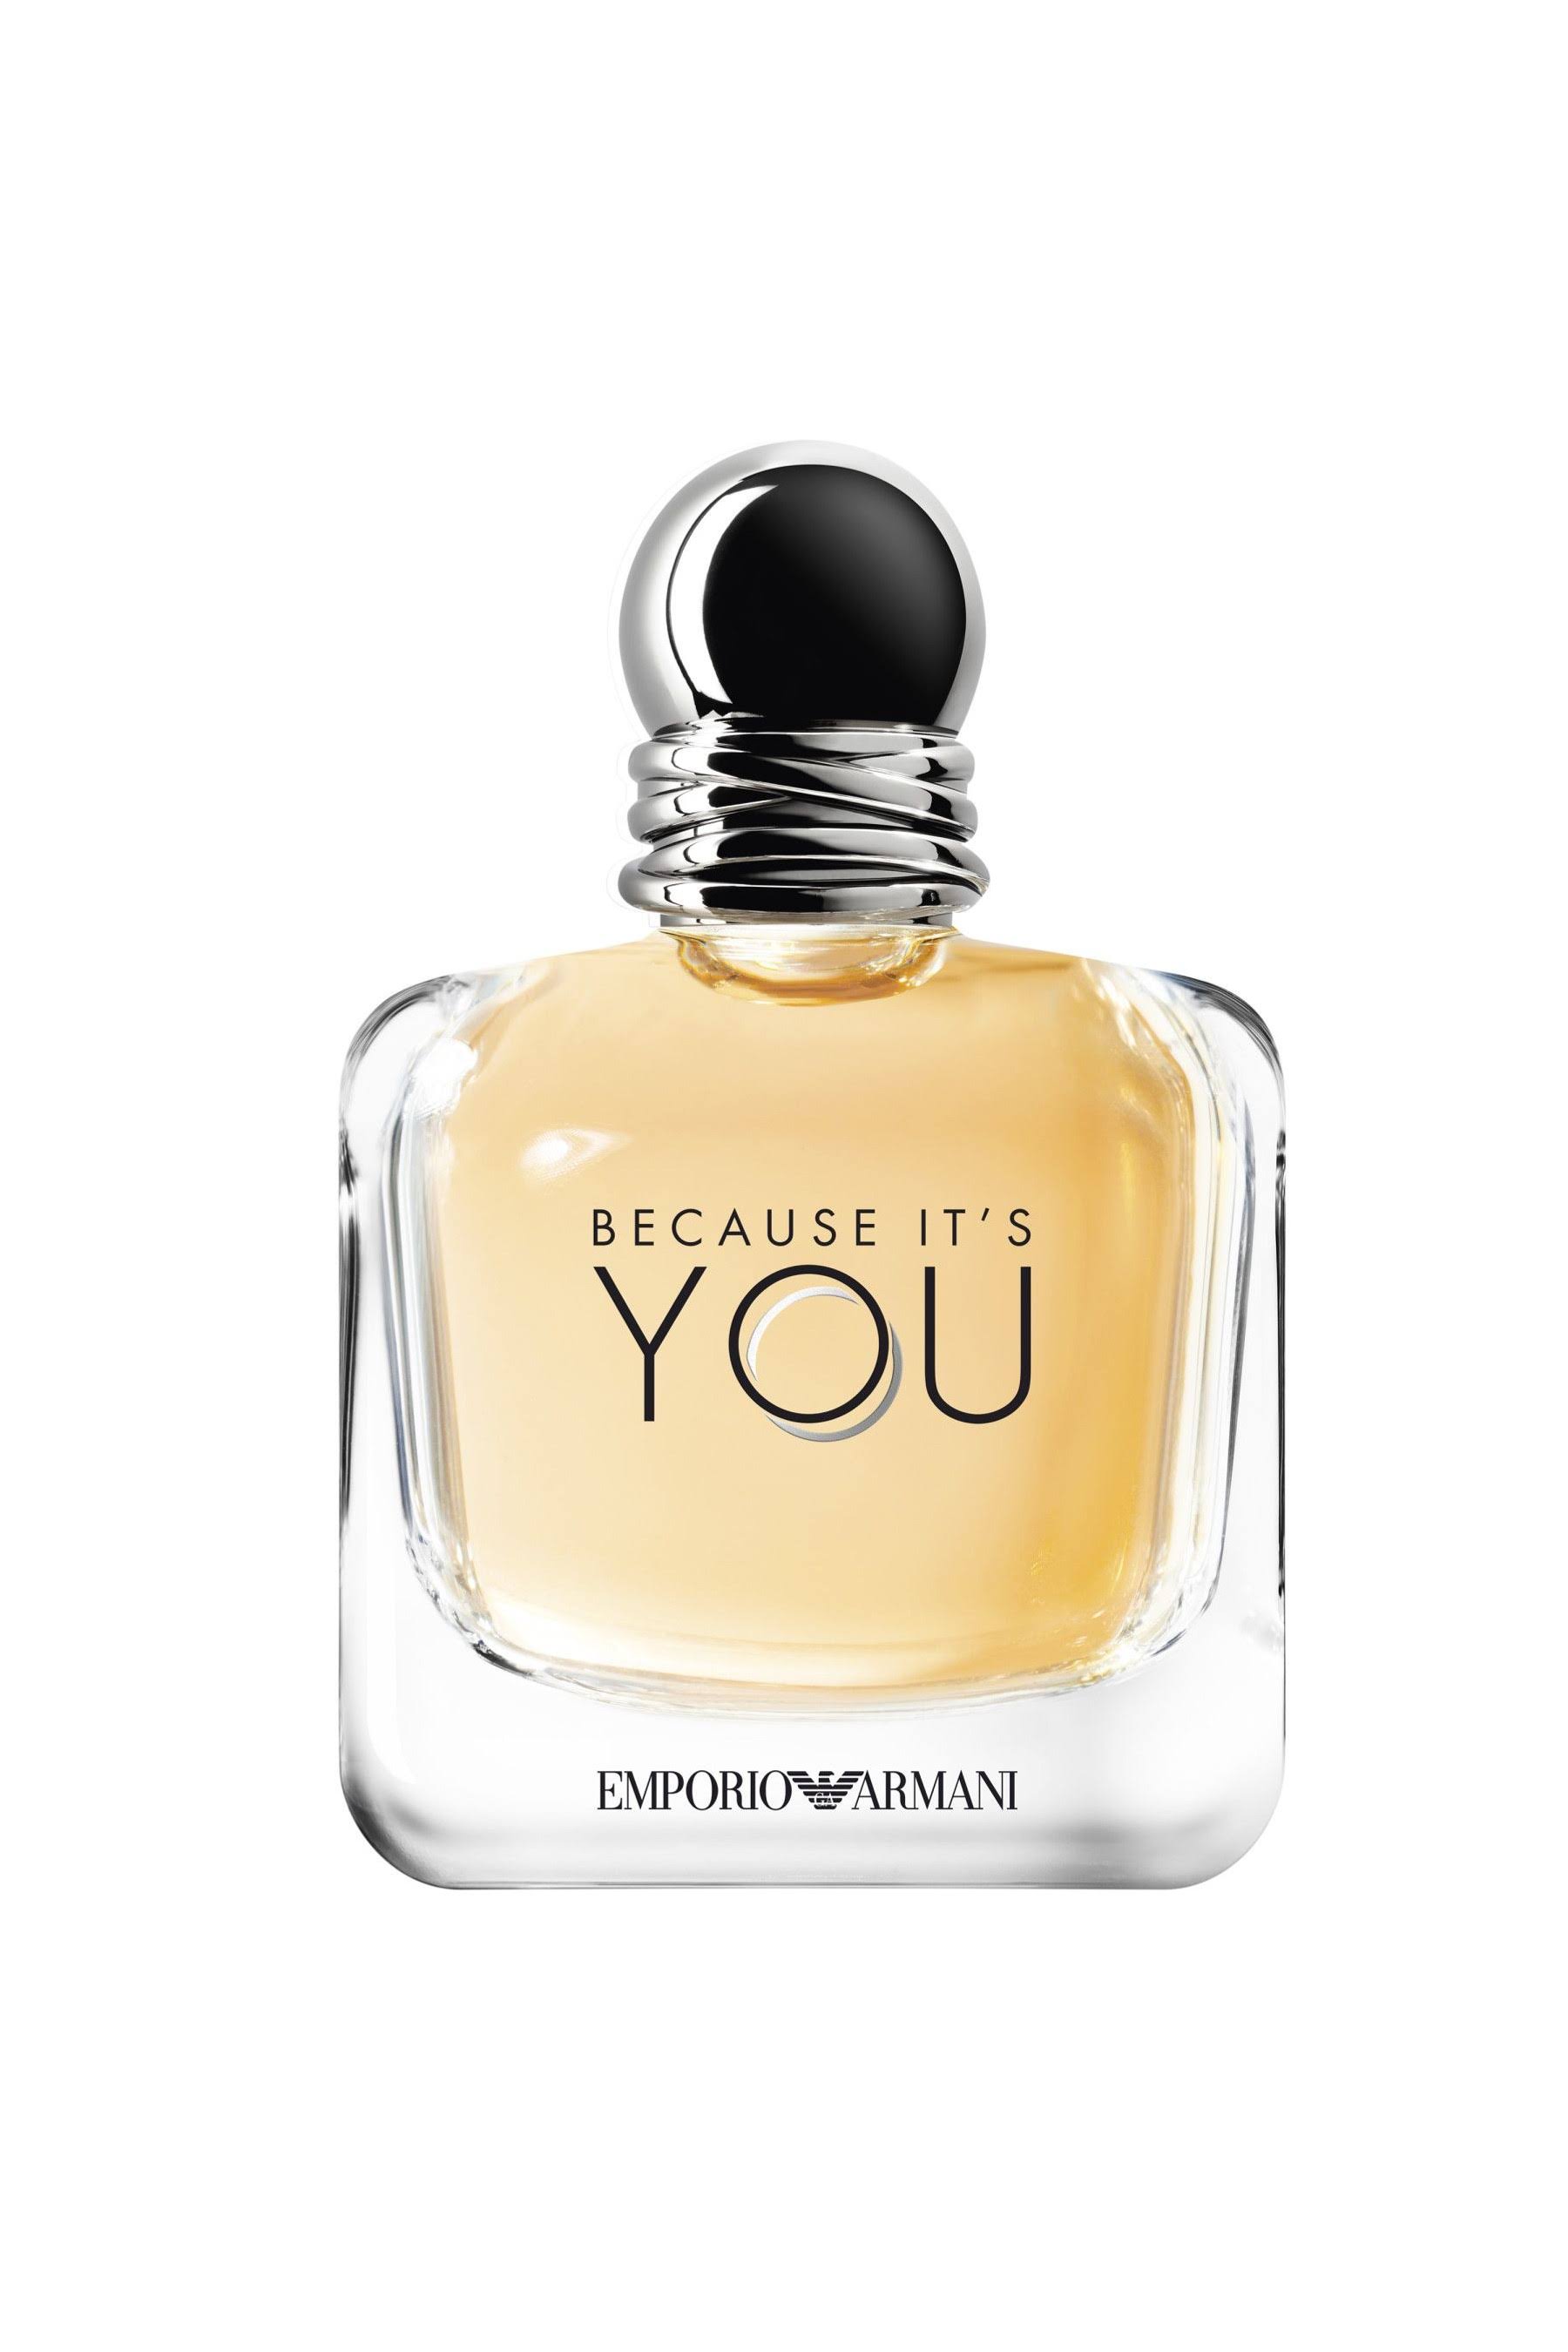 Emporio Armani Because It's You Eau De Parfum Spray - 100ml